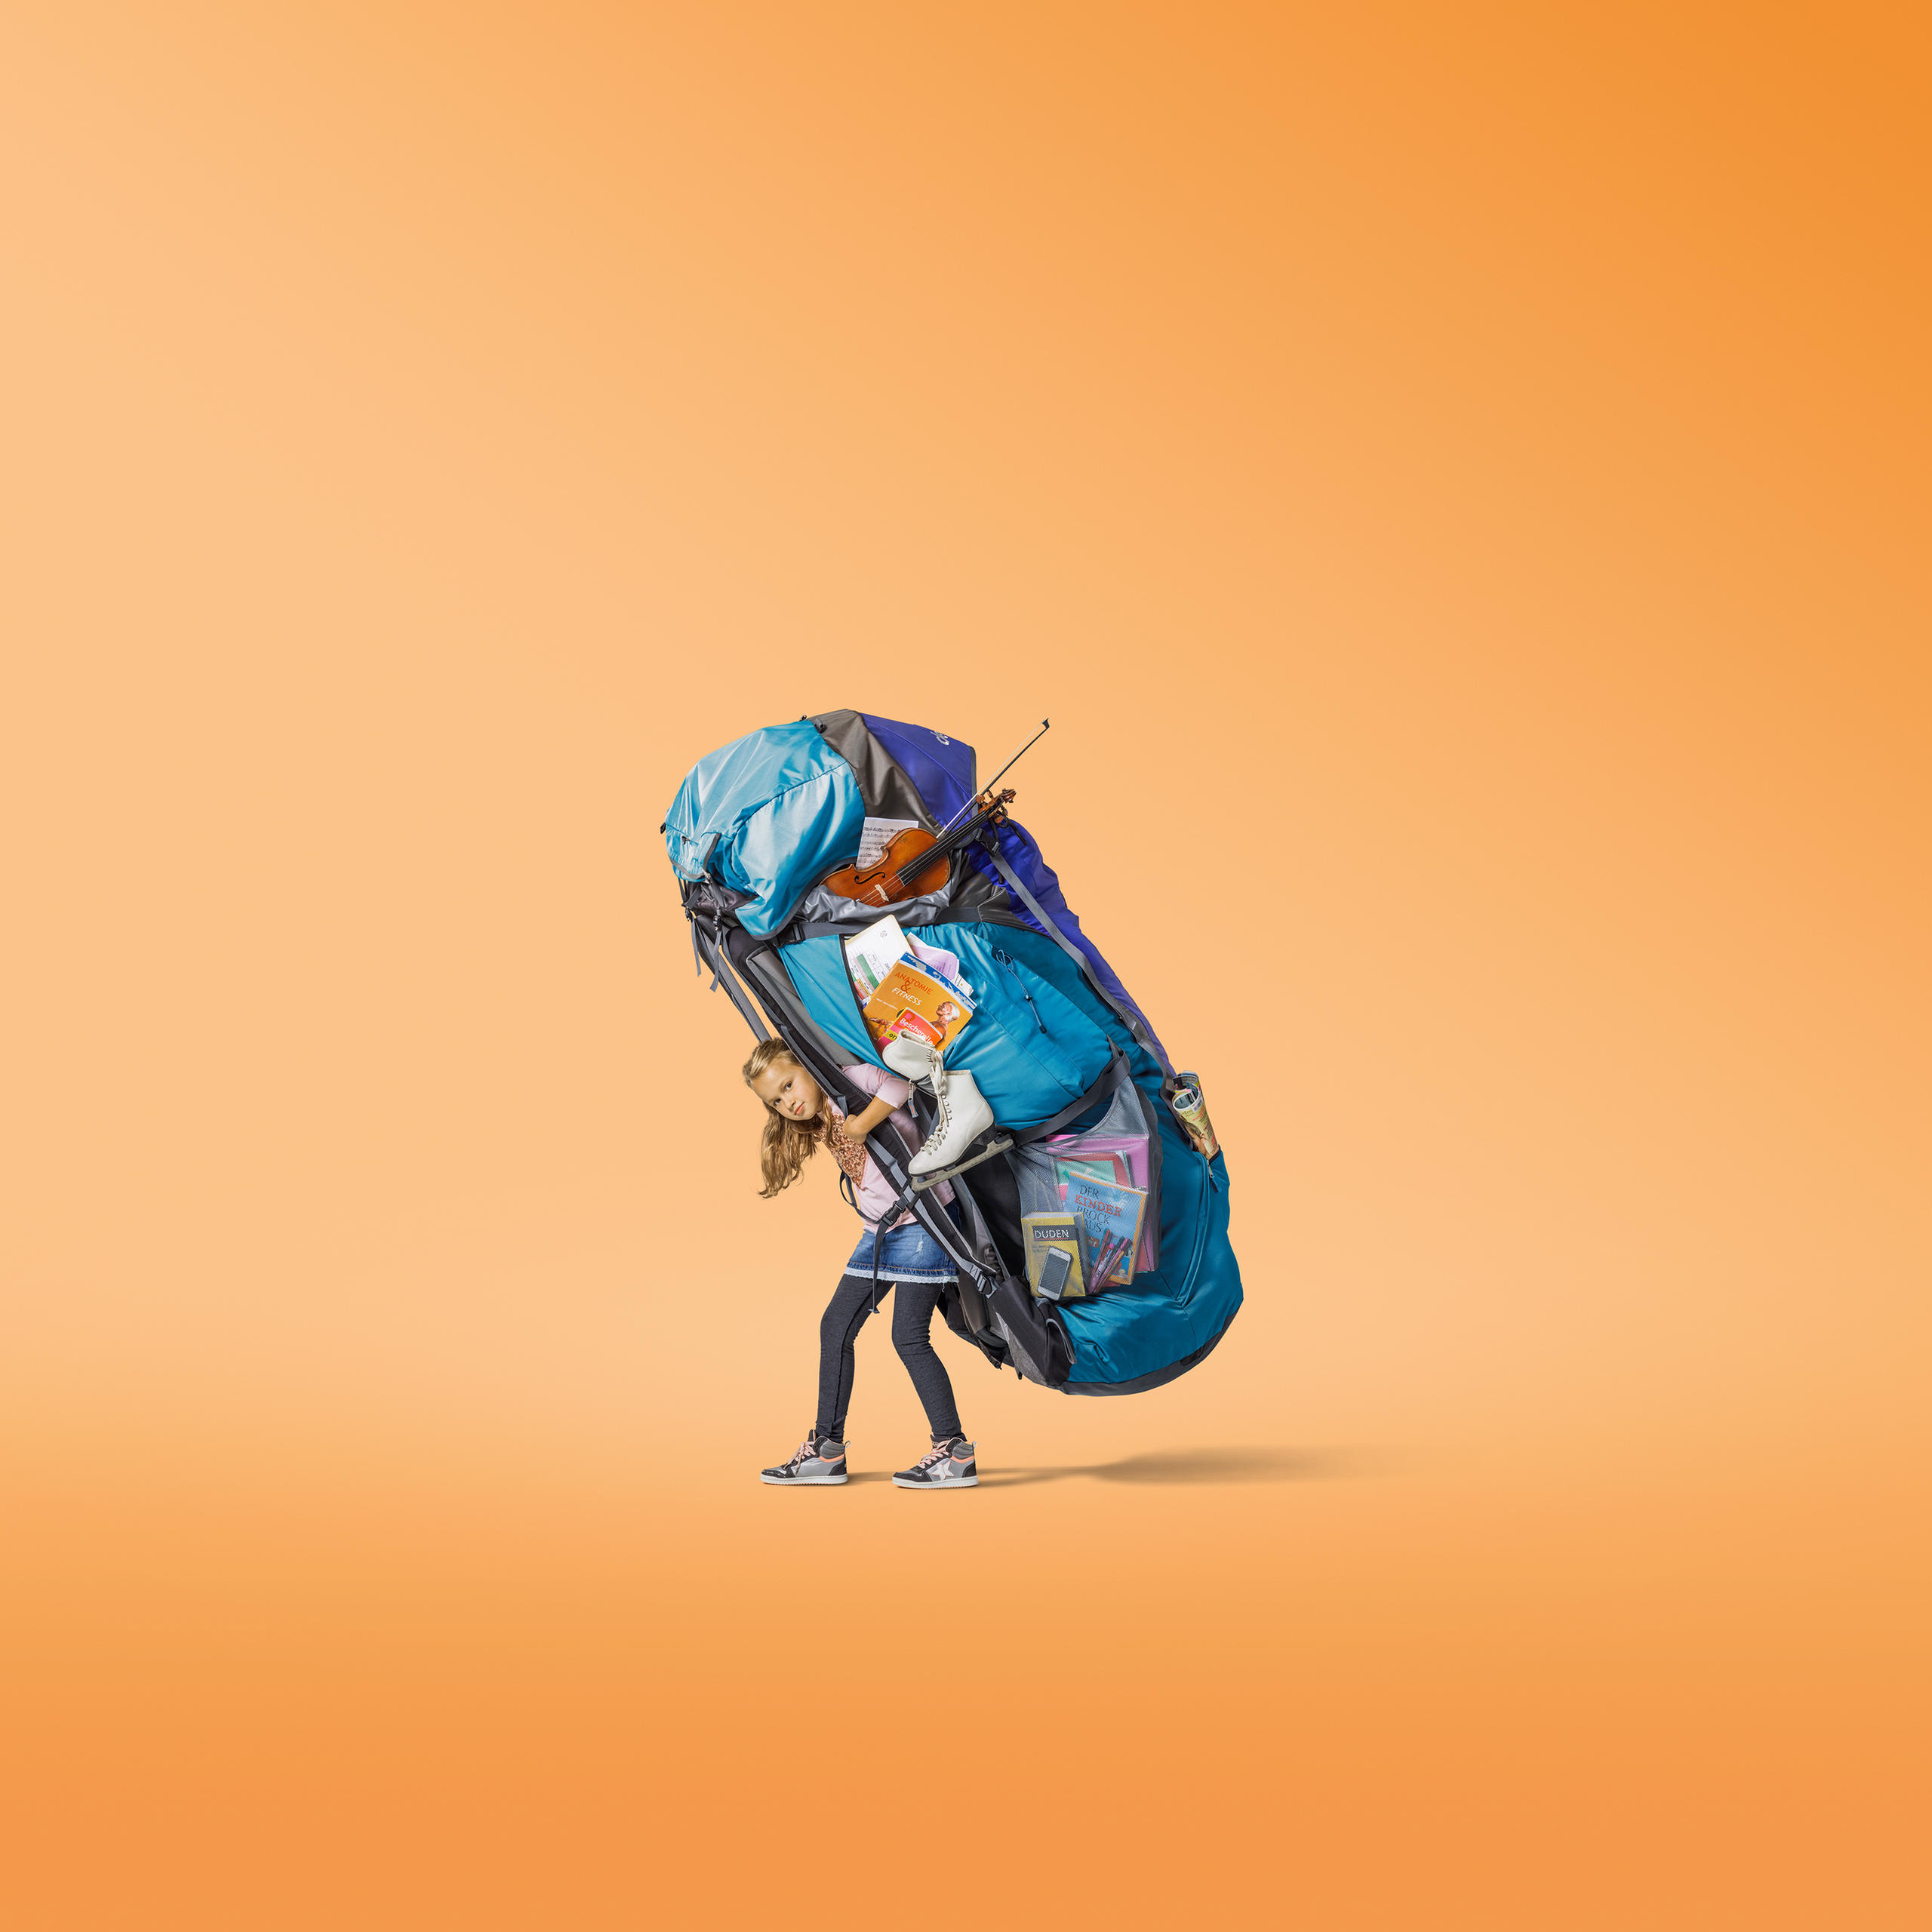 Child carrying heavy rucksack